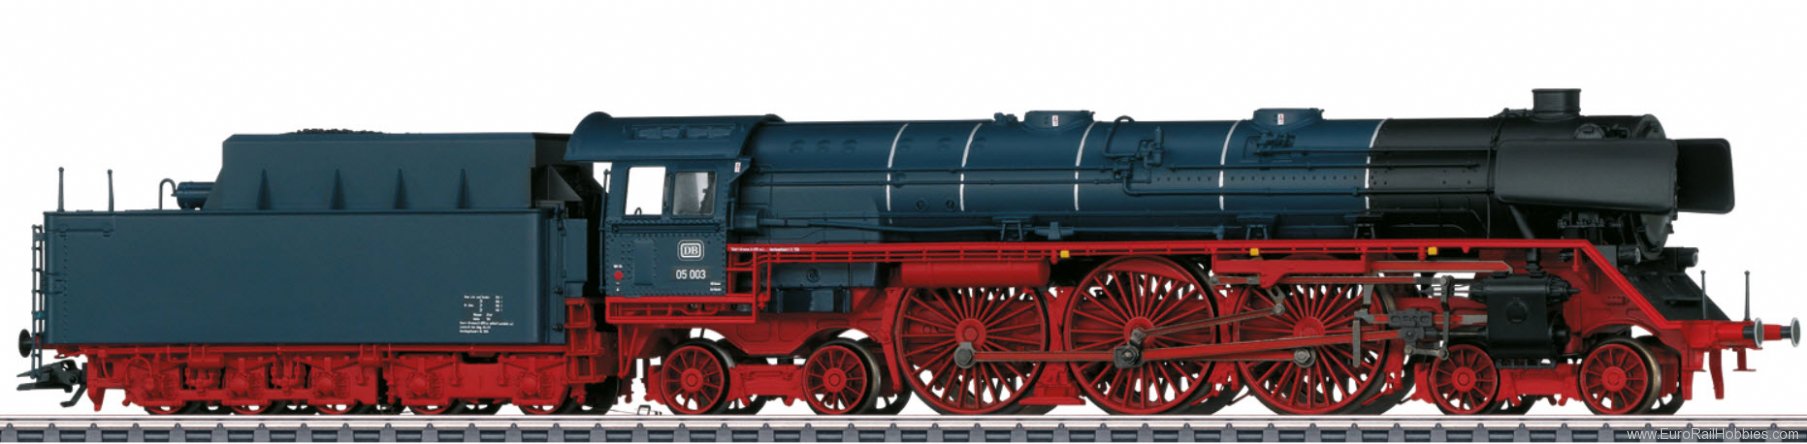 Marklin 39052 DB Class 05 Express Steam Locomotive with a T